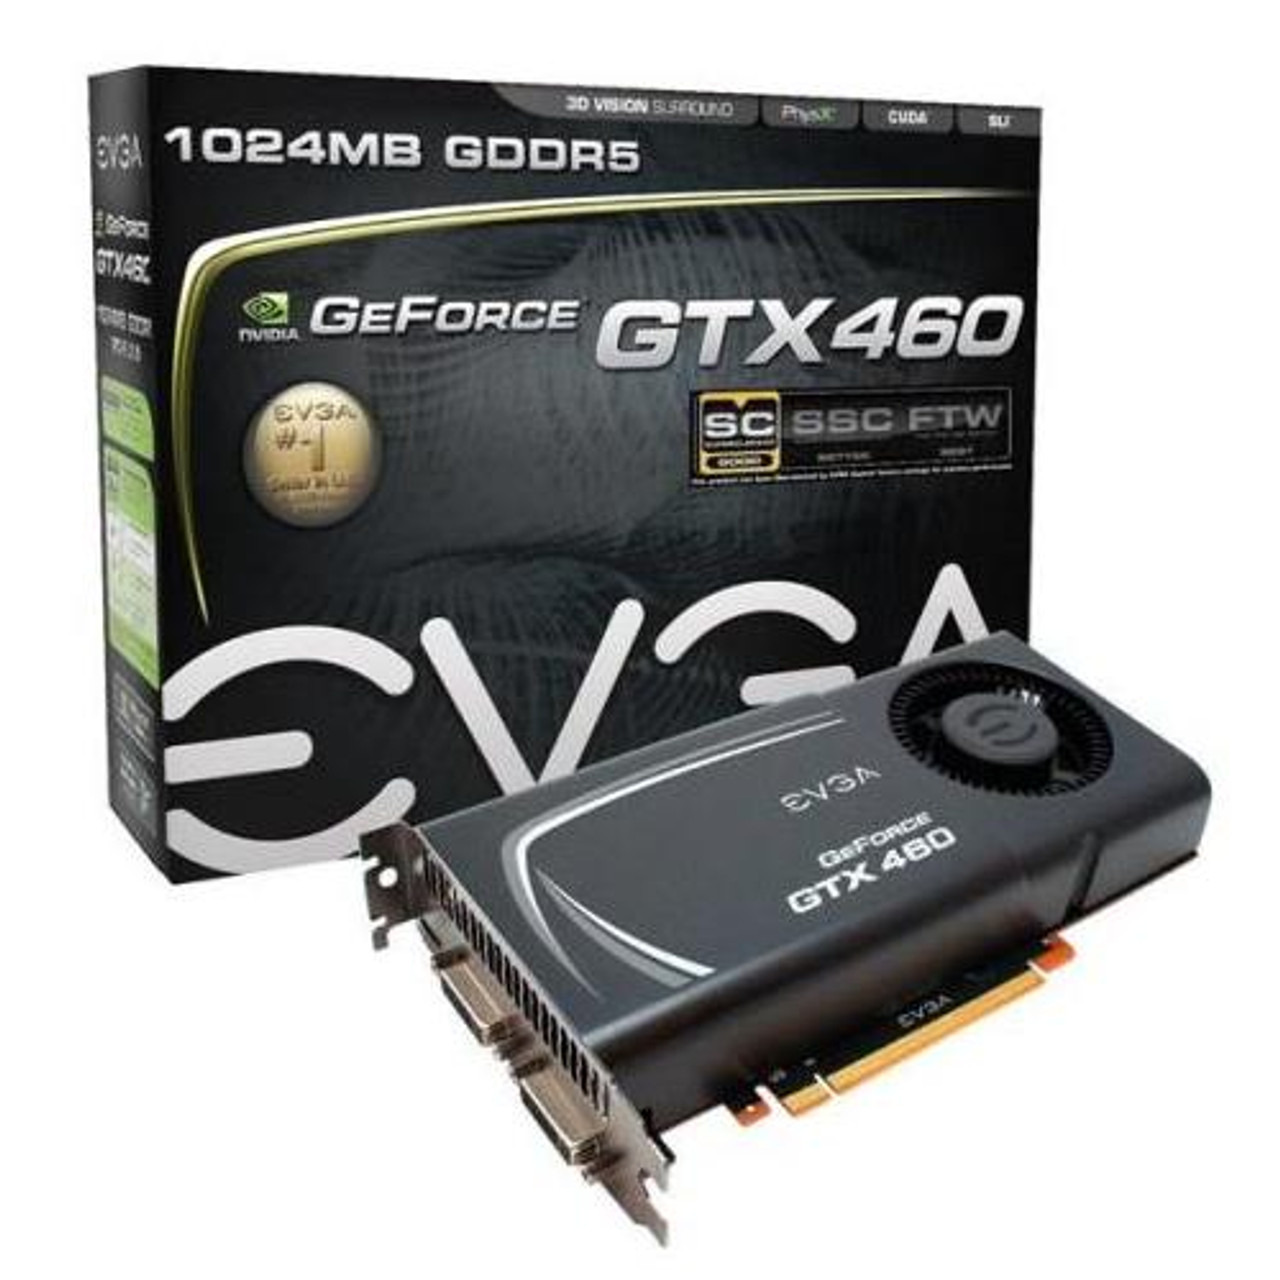 01G-P3-1373-AR EVGA GeForce GTX 460 SuperClocked EE (External Exhaust) 1GB 256-Bit GDDR5 PCI Express 2.0 x16 Dual DVI/ mini HDMI Video Graphics